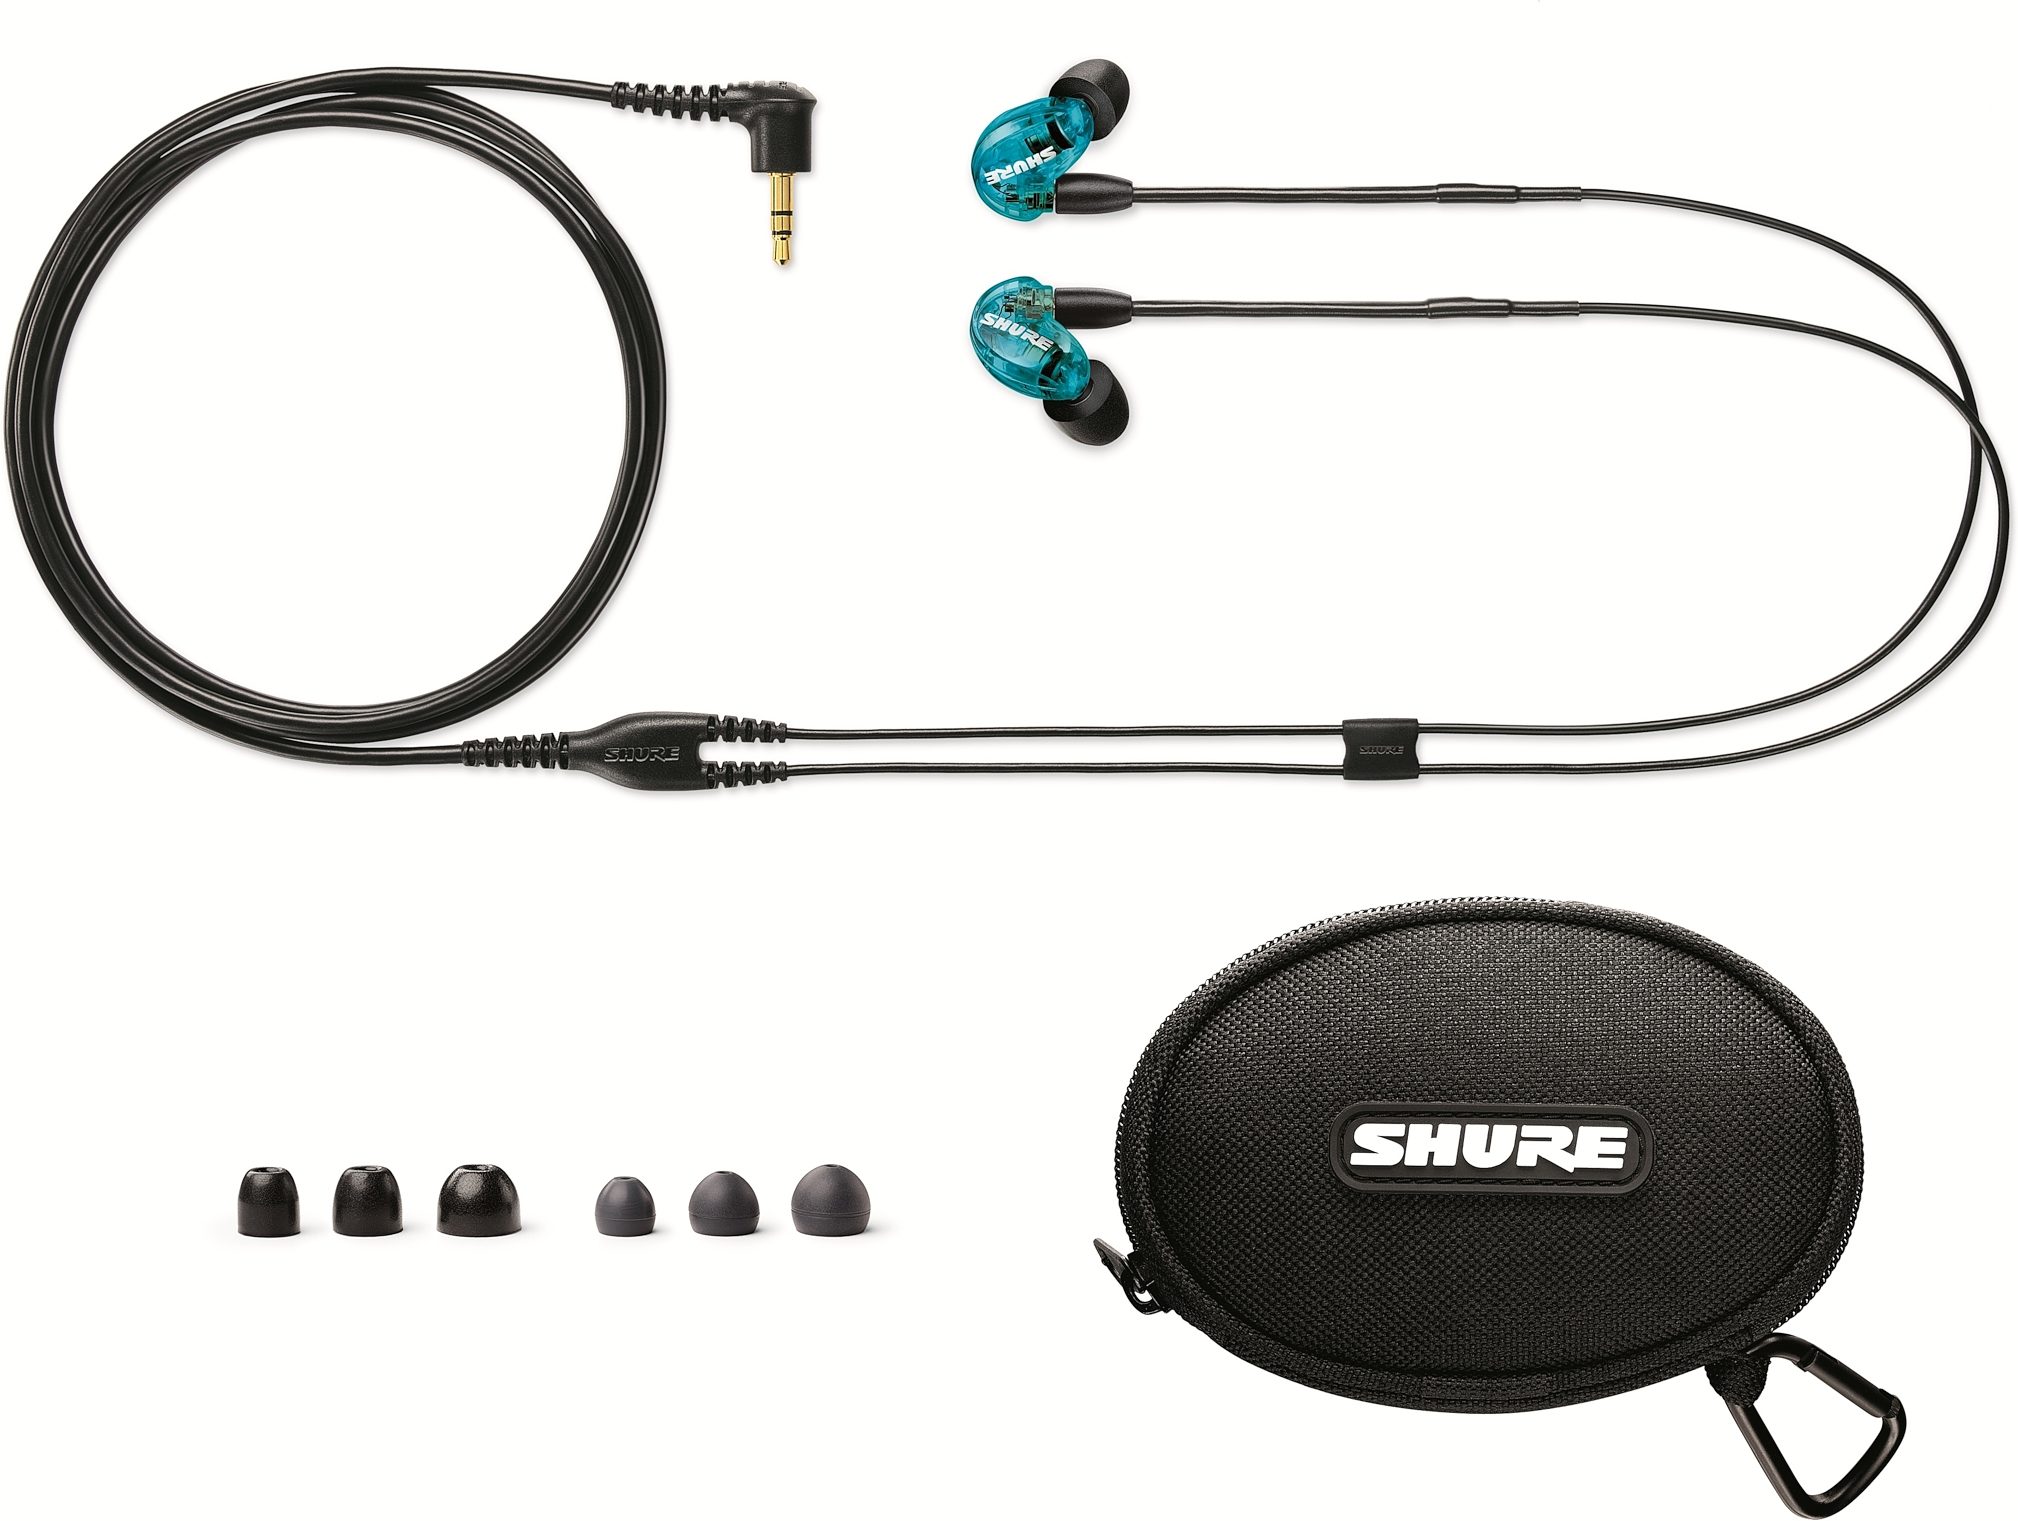 Shure SE215 Pro Sound Isolating Earphones